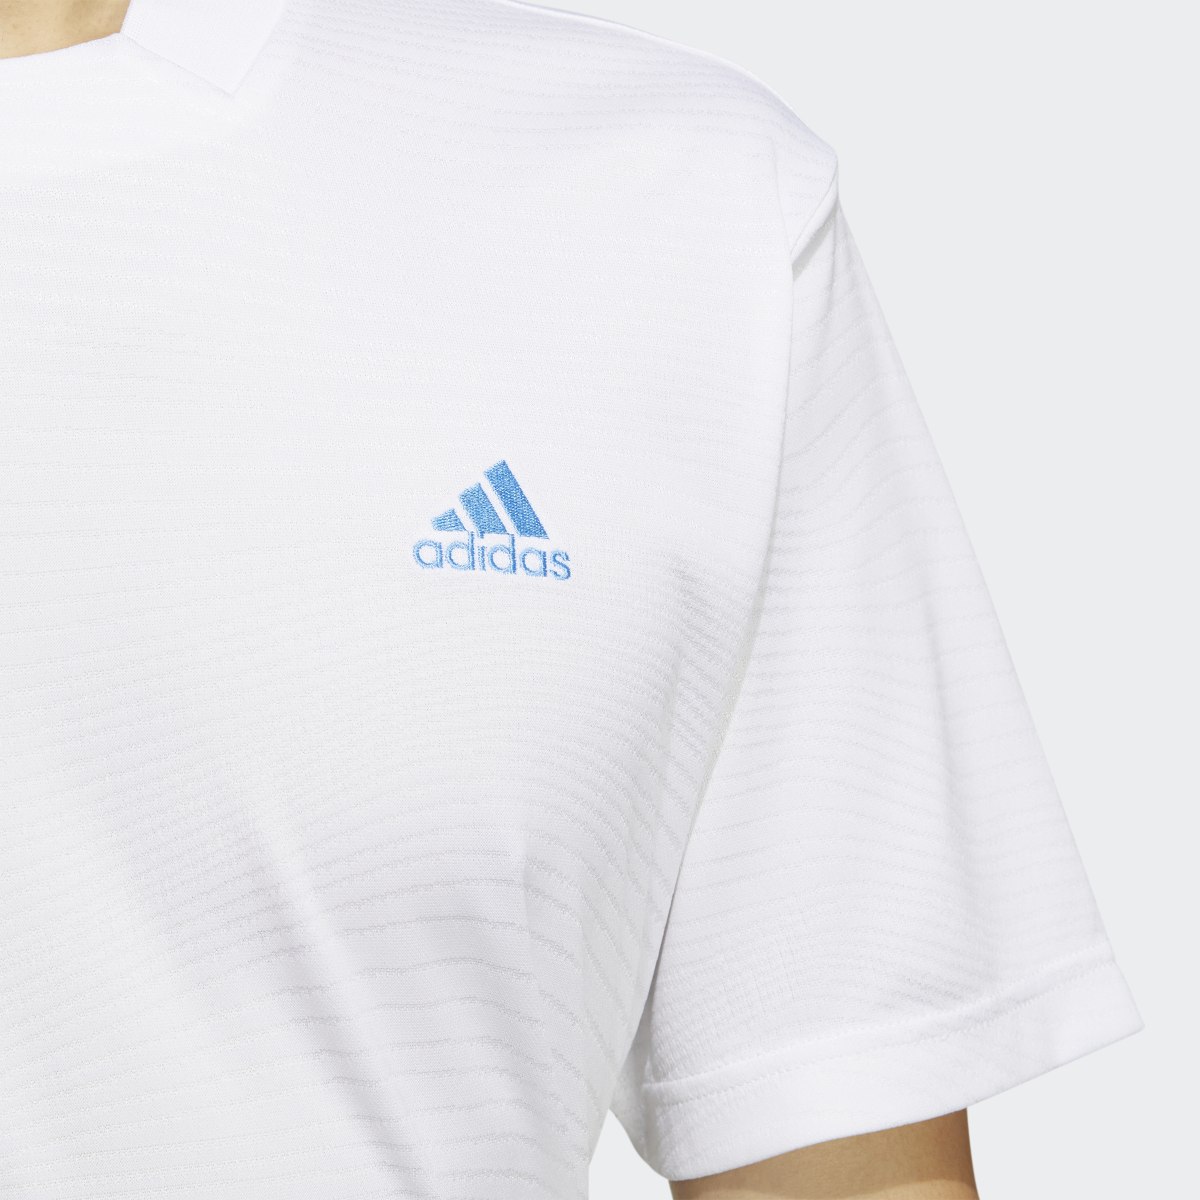 Adidas Made to be Remade Rib Collar Shirt. 6